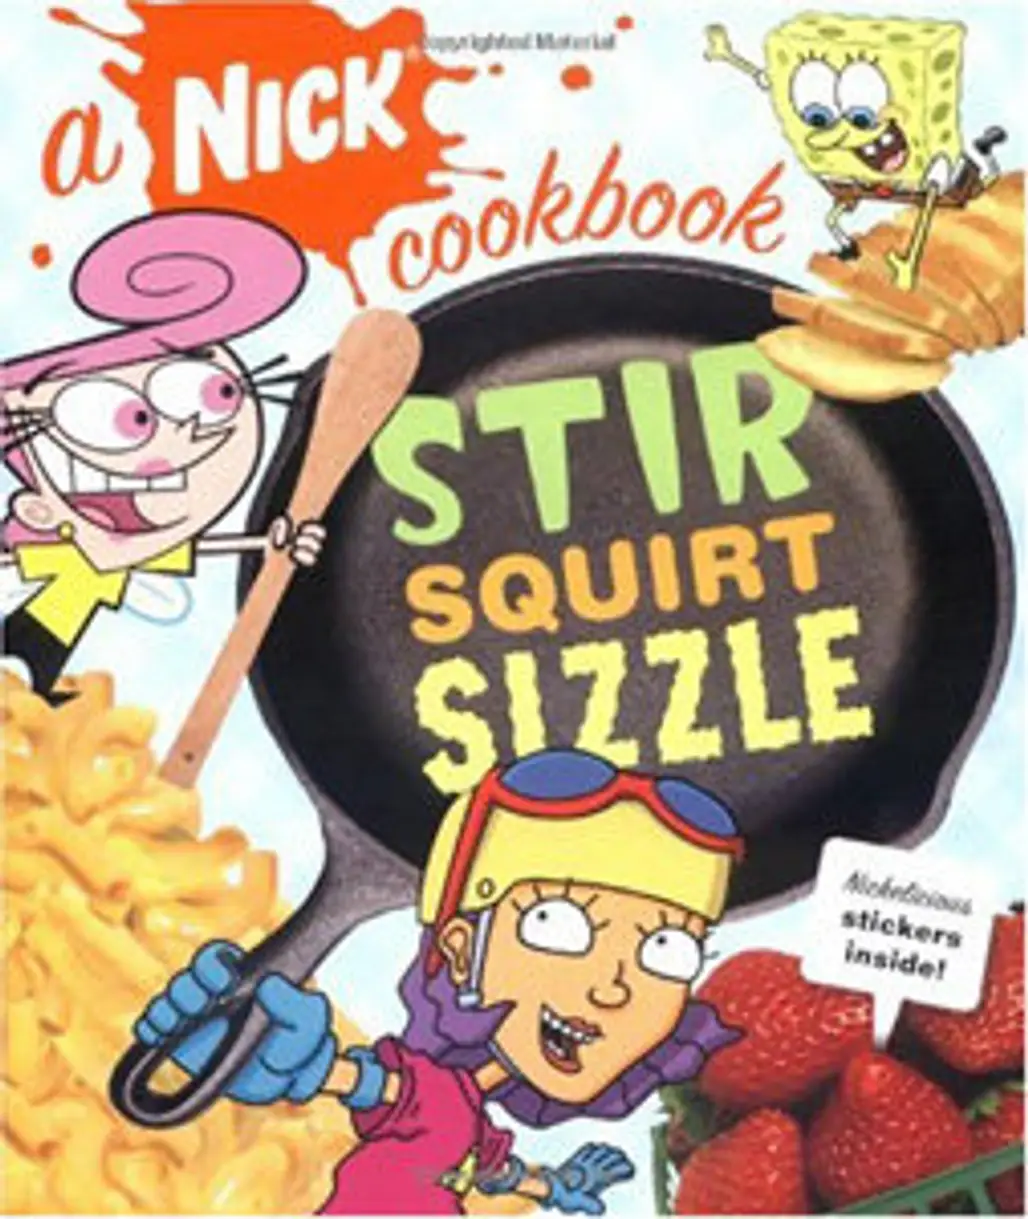 Stir, Squirt, Sizzle: a Nick Cookbook